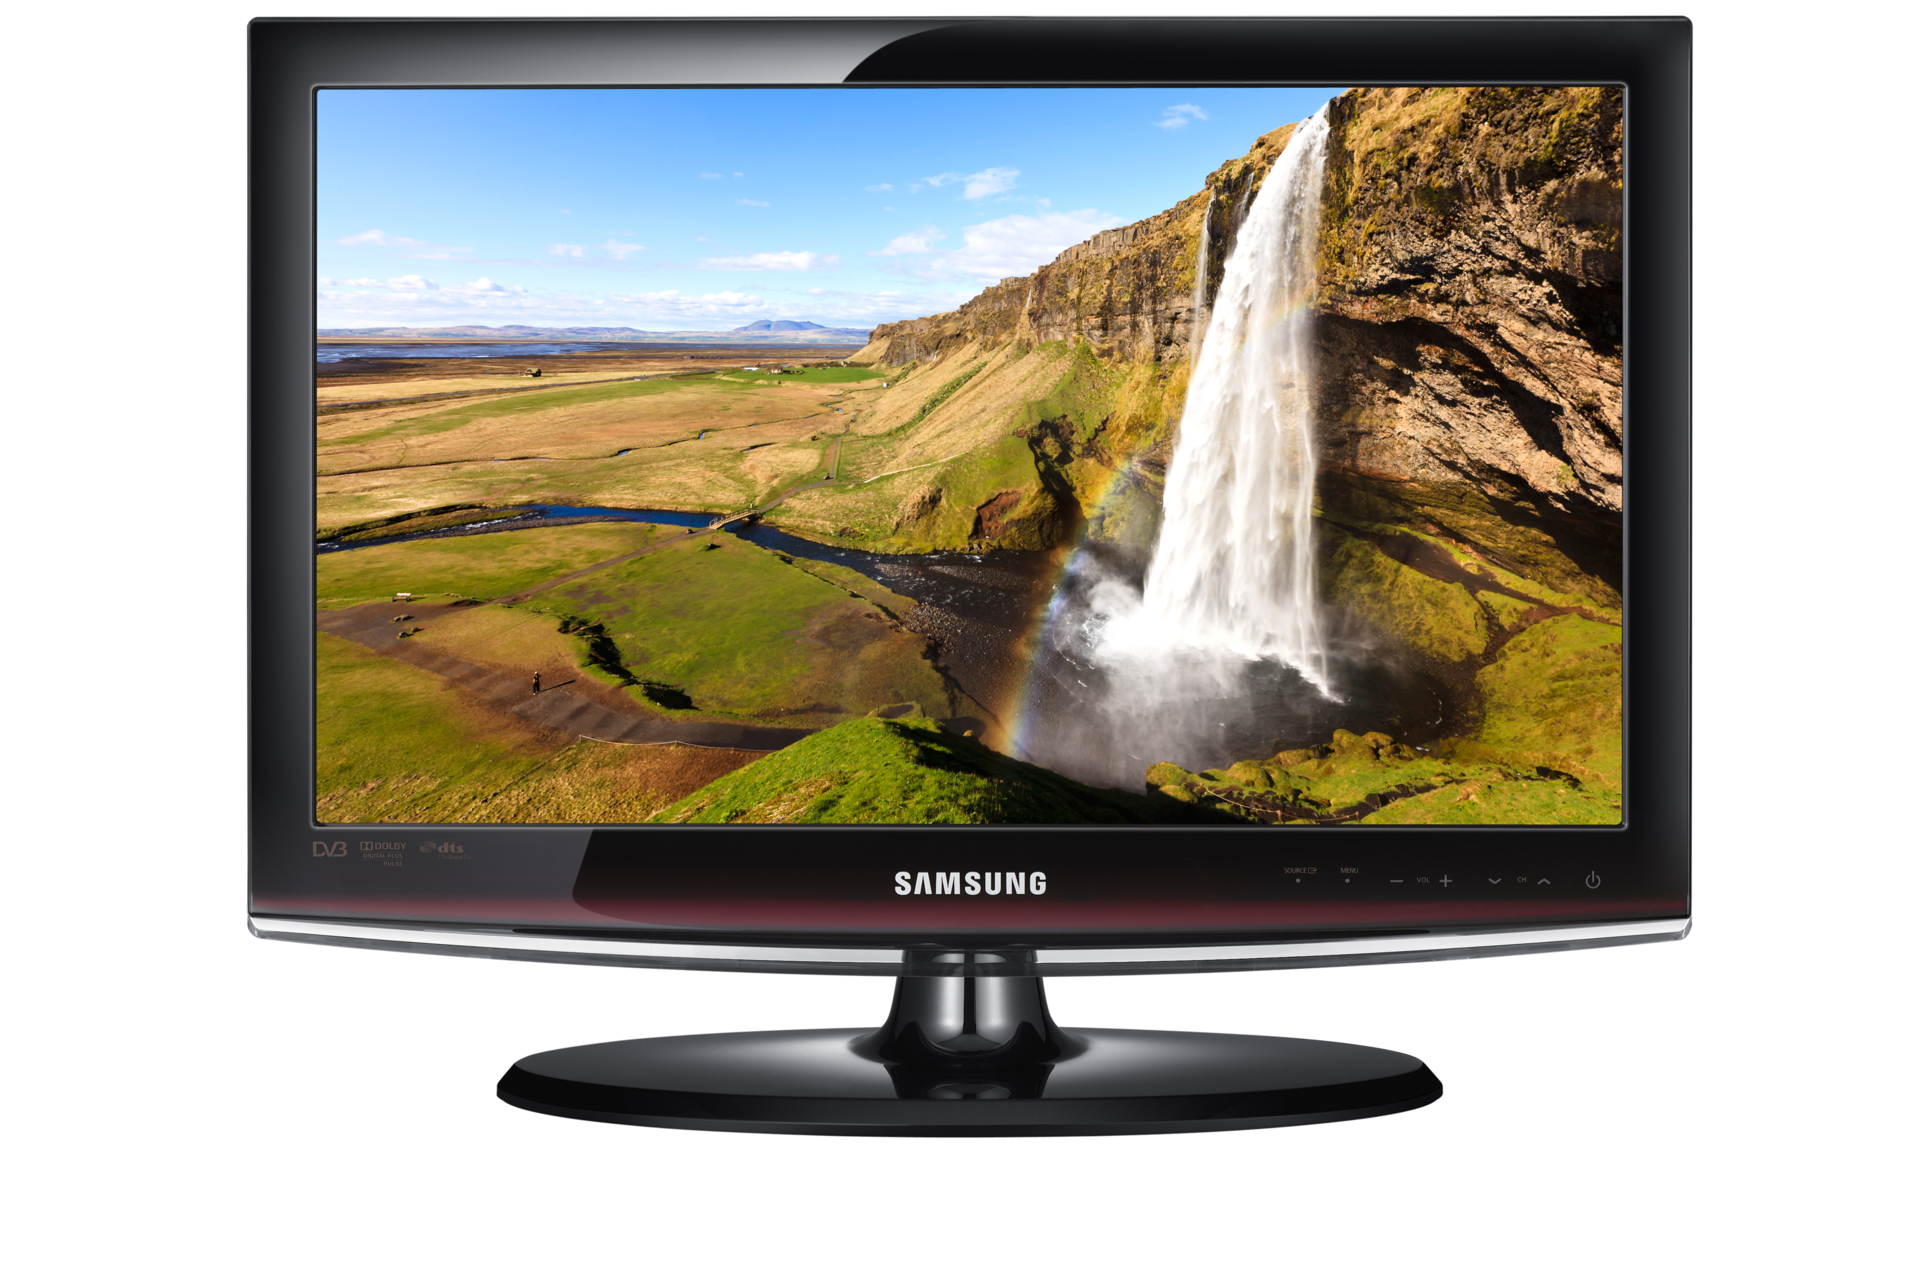 22" C450 4 LCD | Samsung Philippines